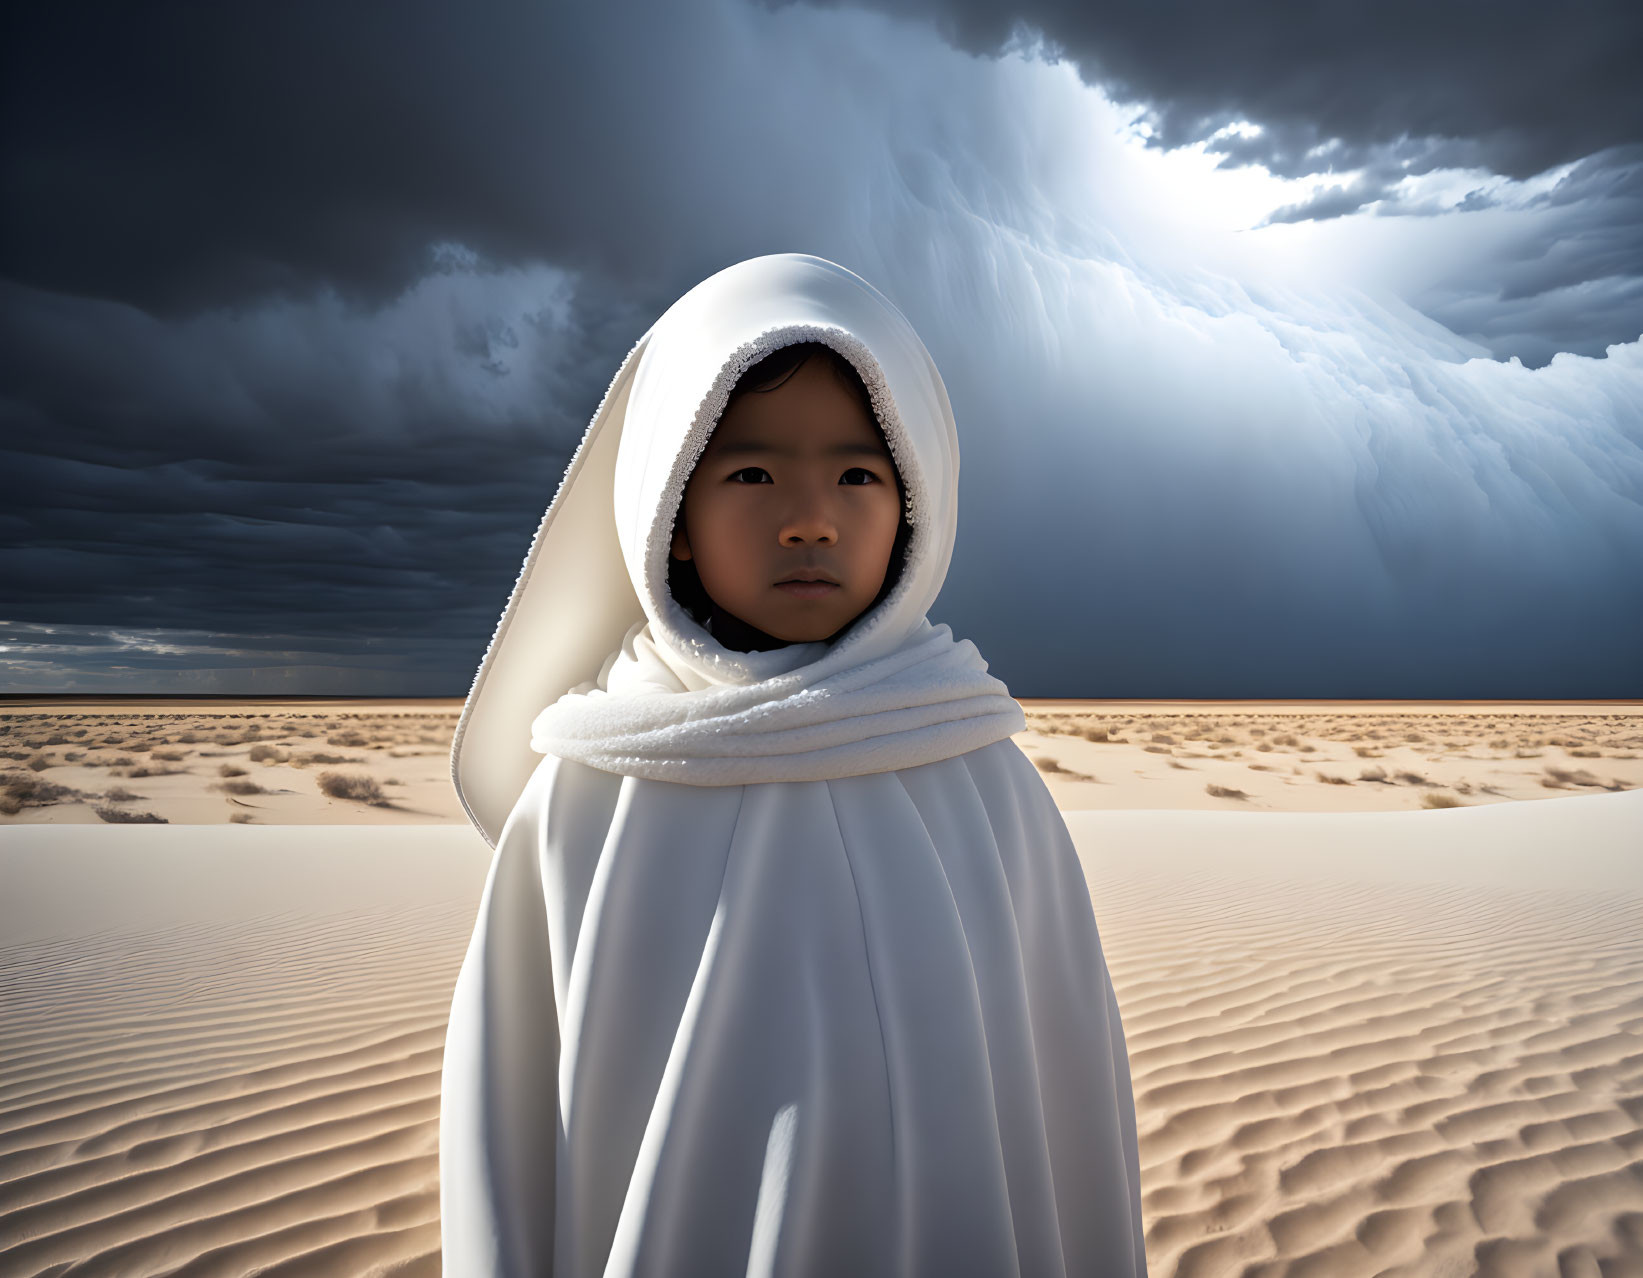 Child in white cloak standing in desert under stormy clouds